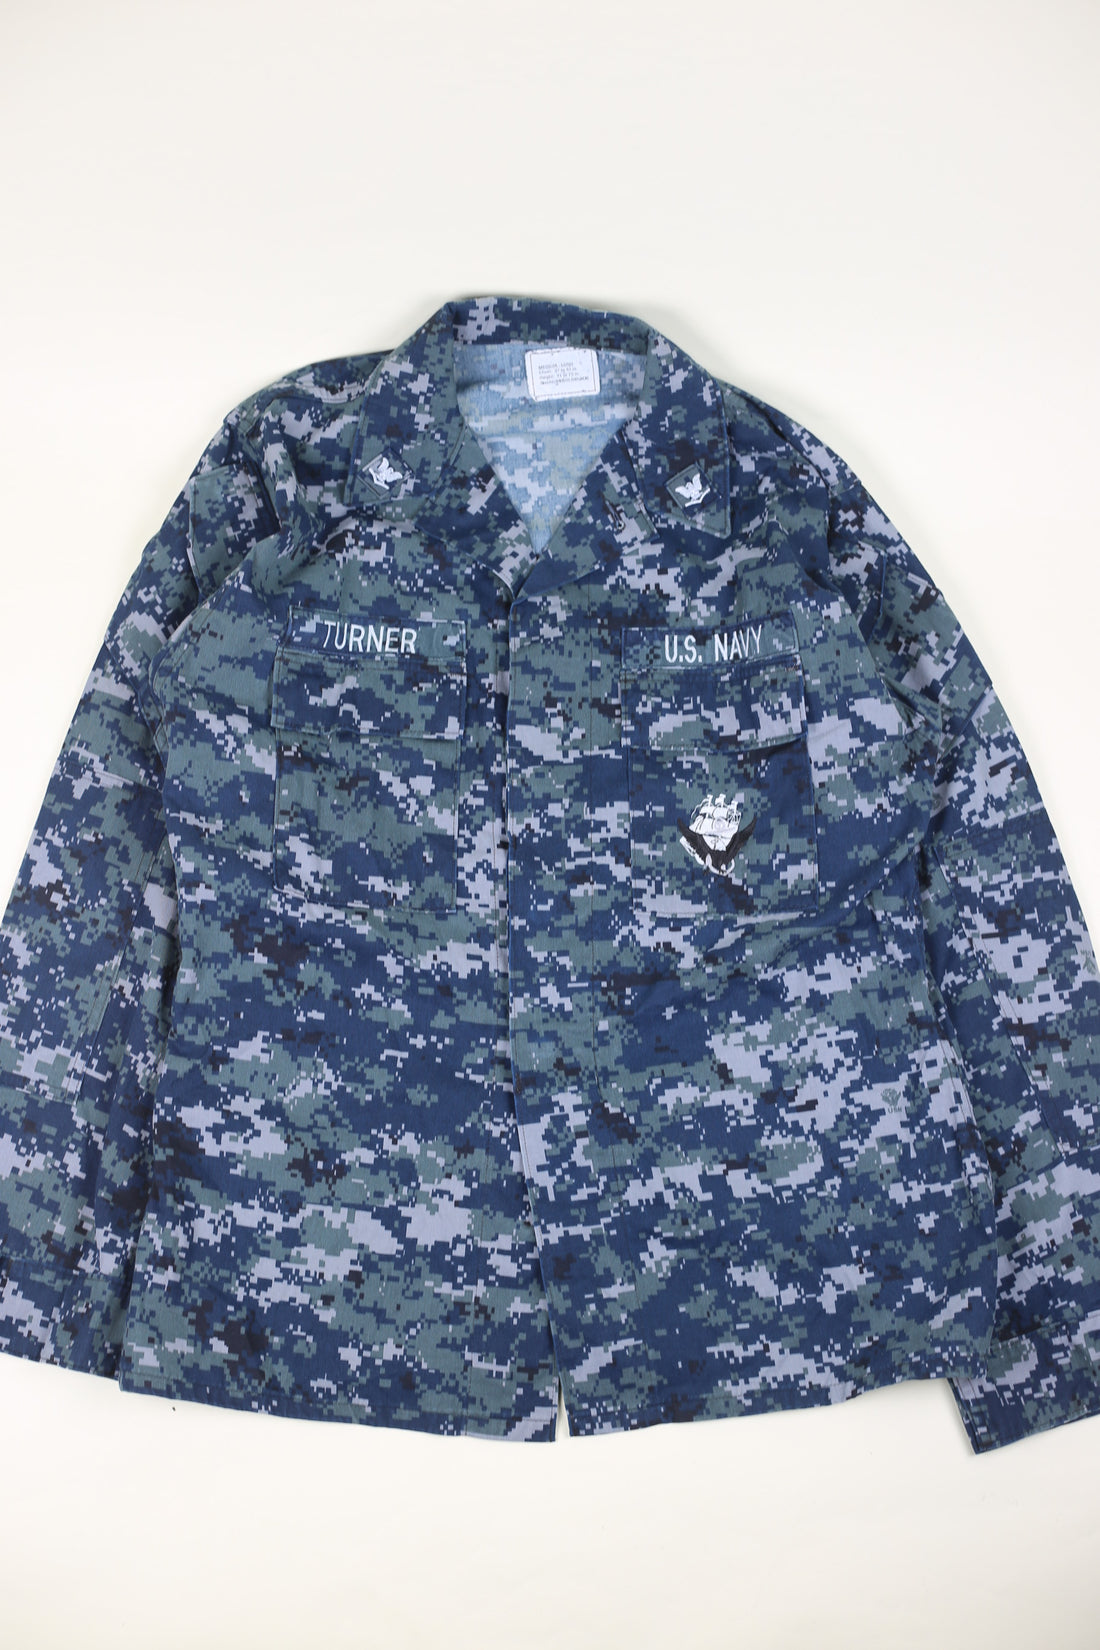 Camicia overshirt Marpat Us Navy  - L  -